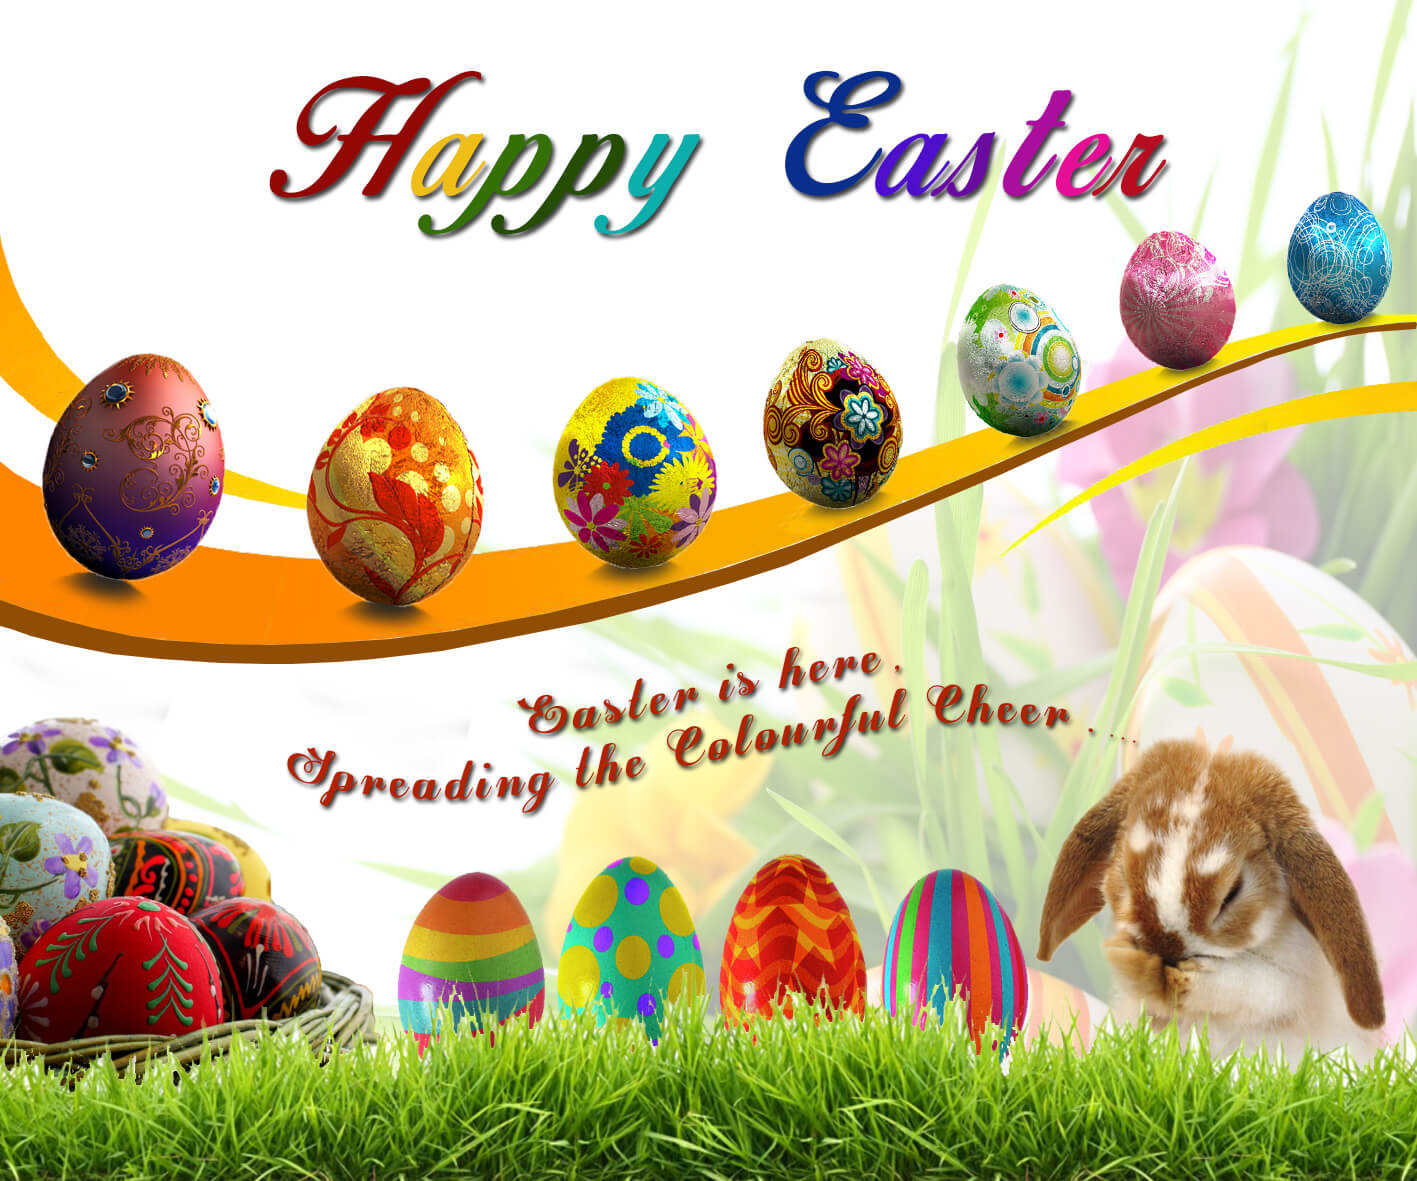 Easter | eGreetings Portal